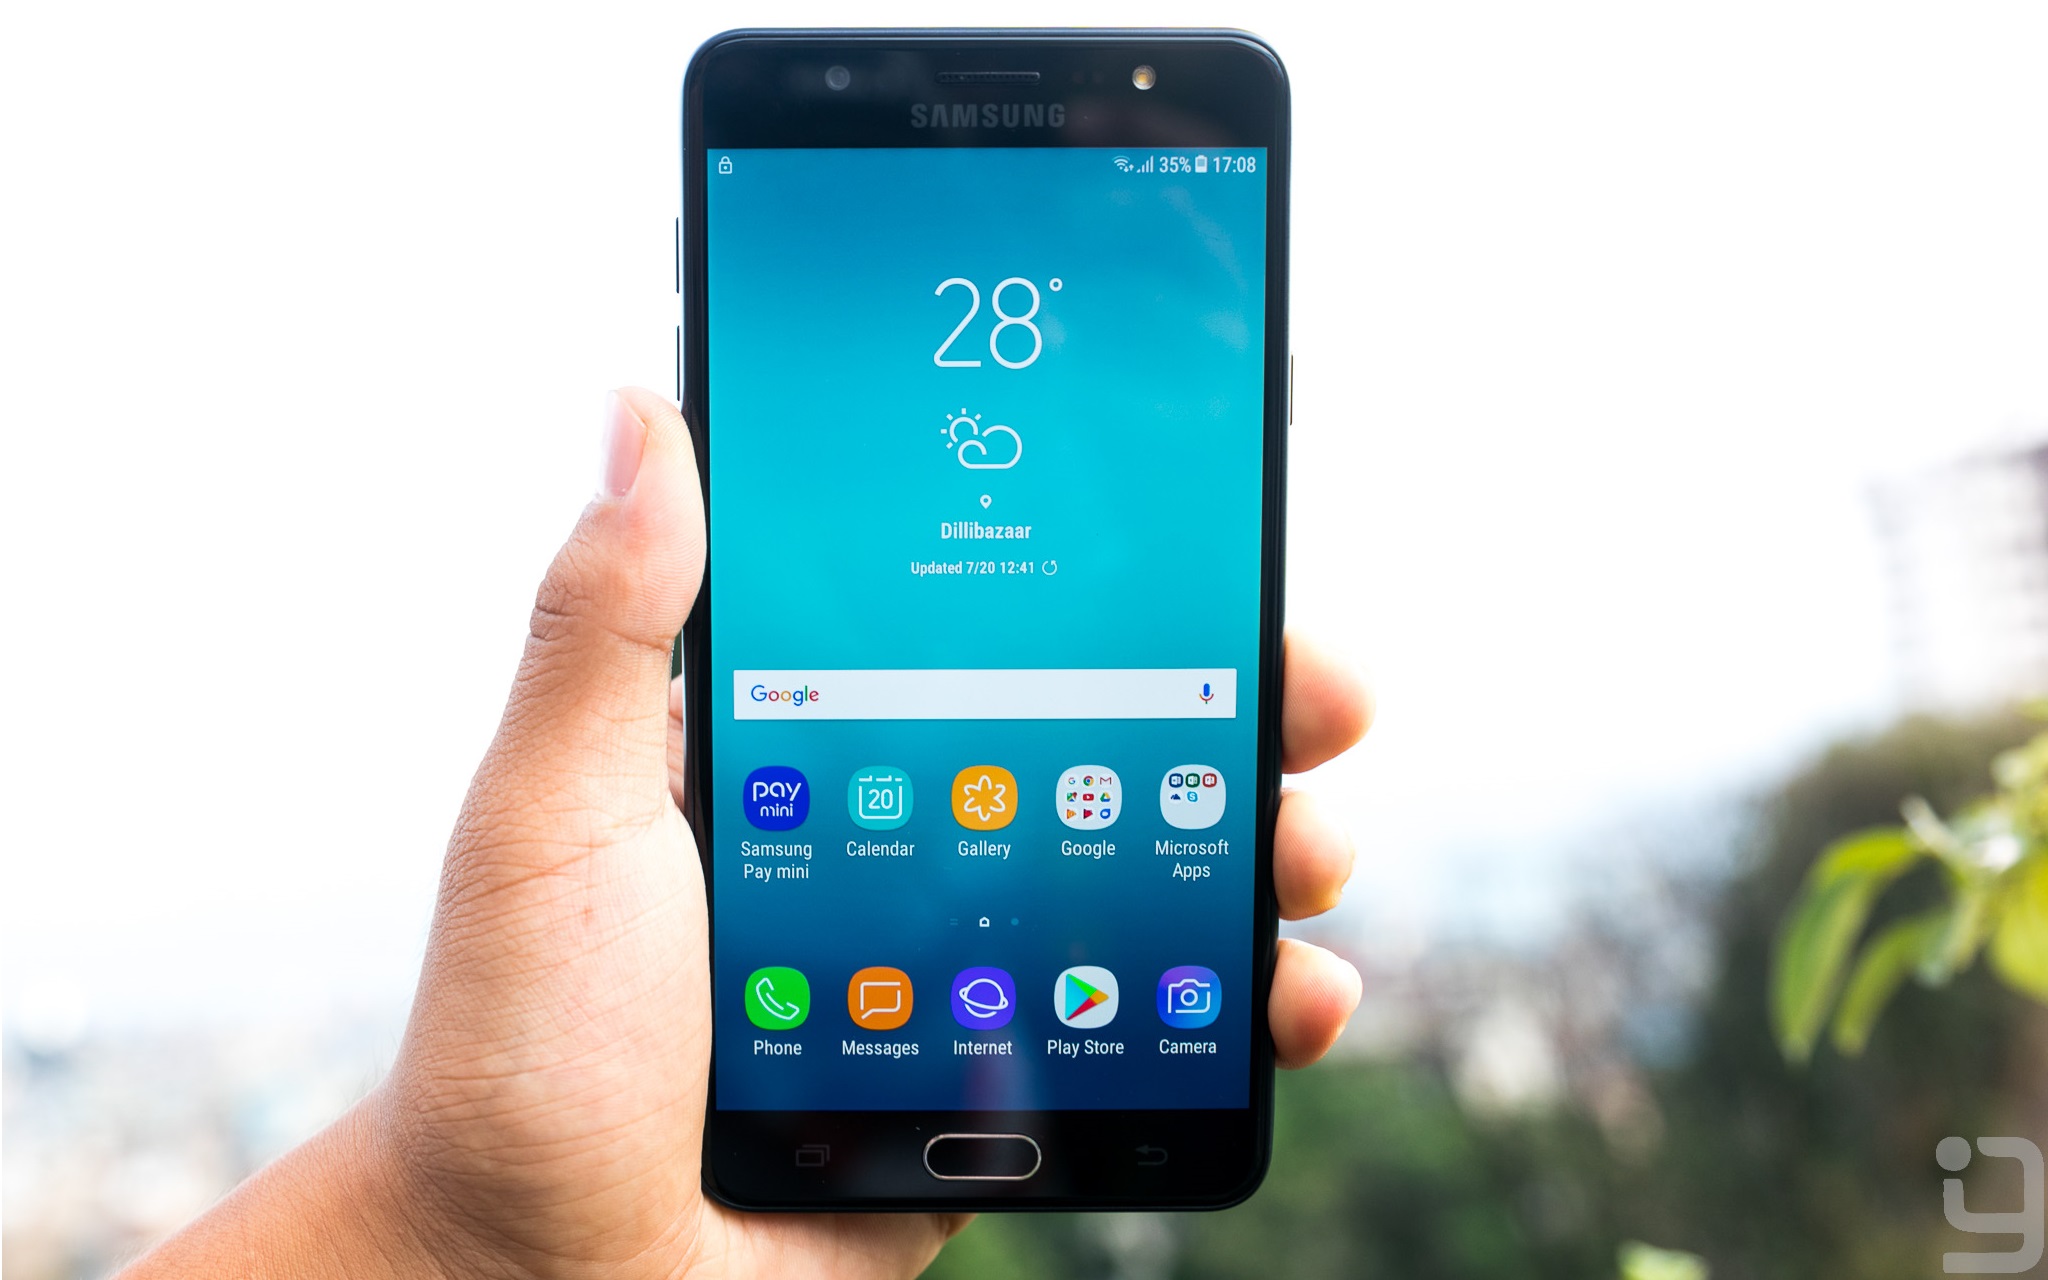 samsung galaxy J7 max launched - Samsung Galaxy J7 Max price in Nepal